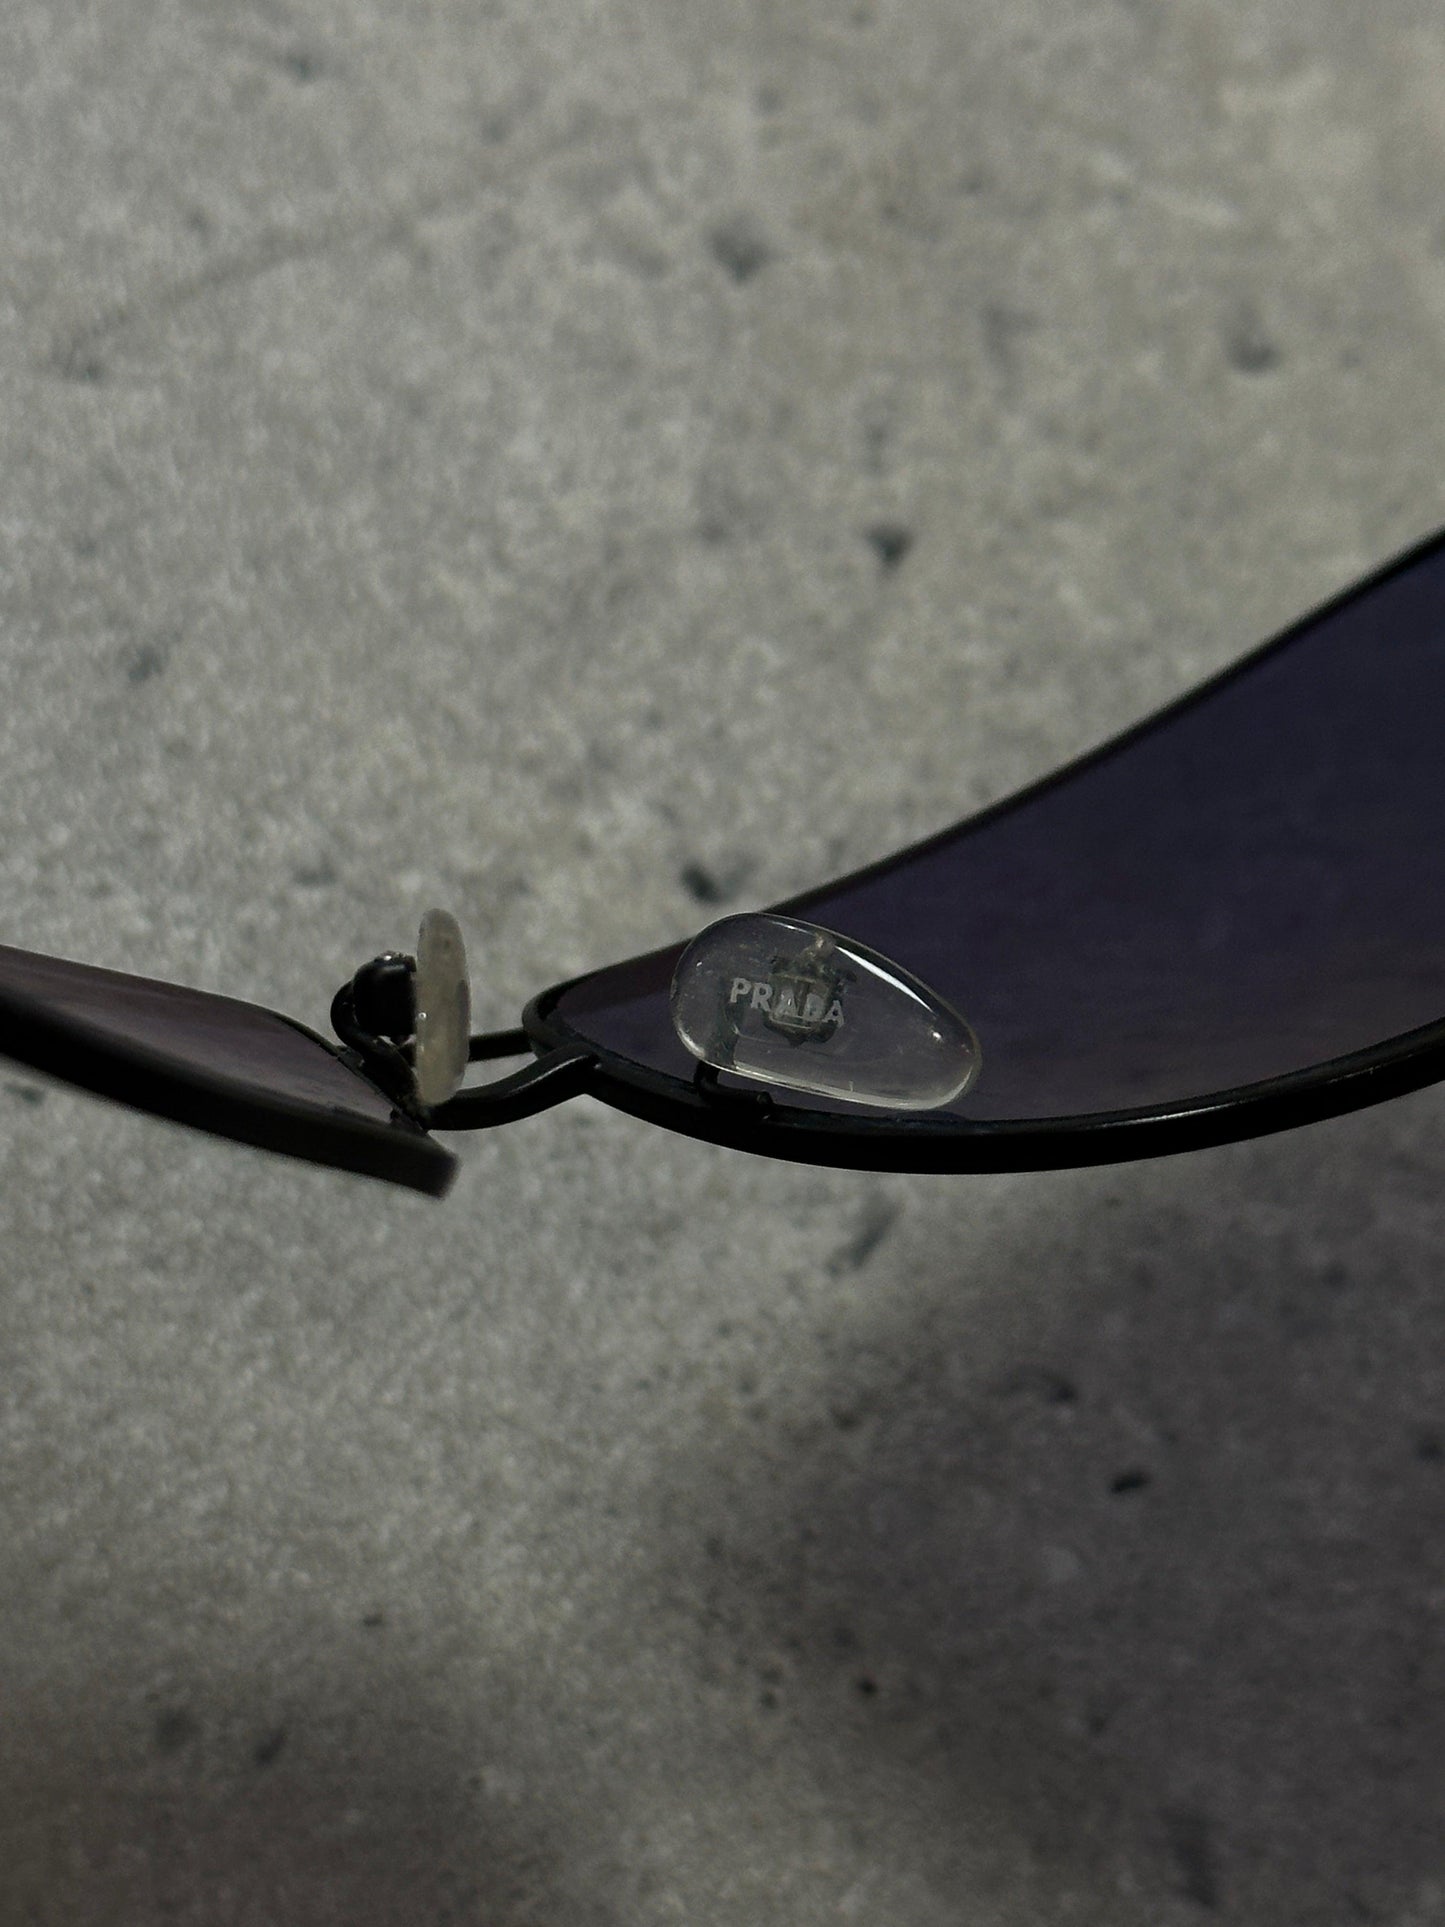 Prada Aviator Shield Sunglasses - Known Source